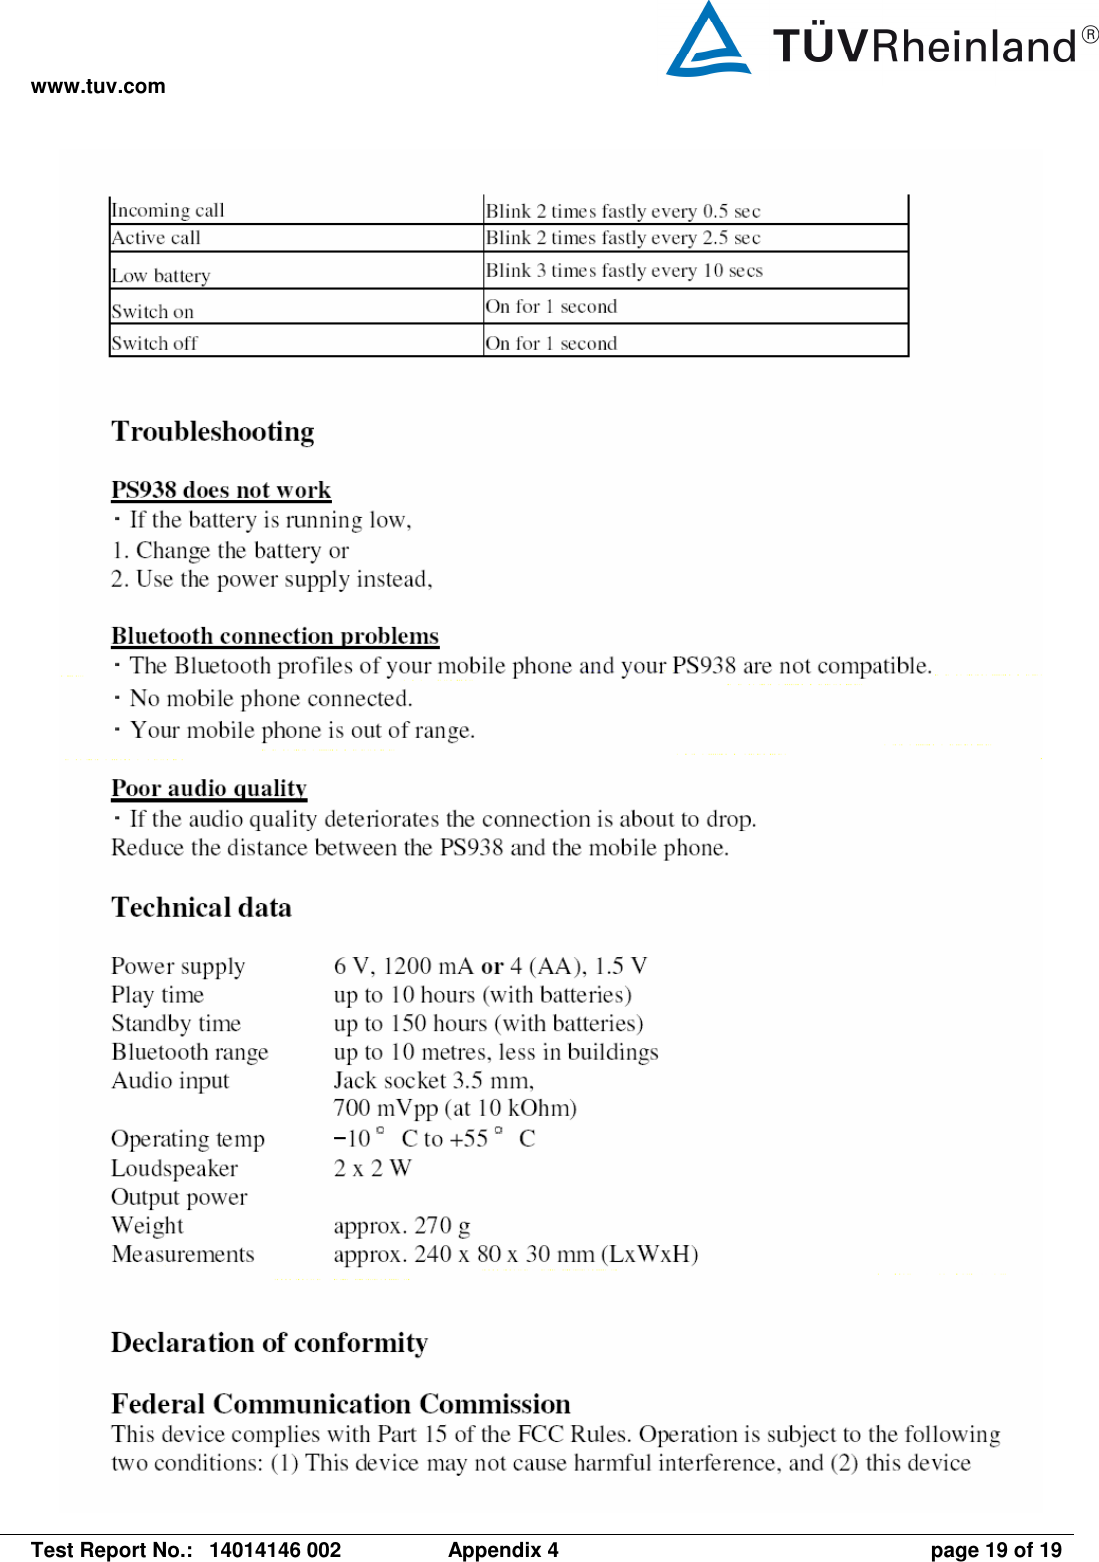 www.tuv.com   Test Report No.:  14014146 002  Appendix 4  page 19 of 19    